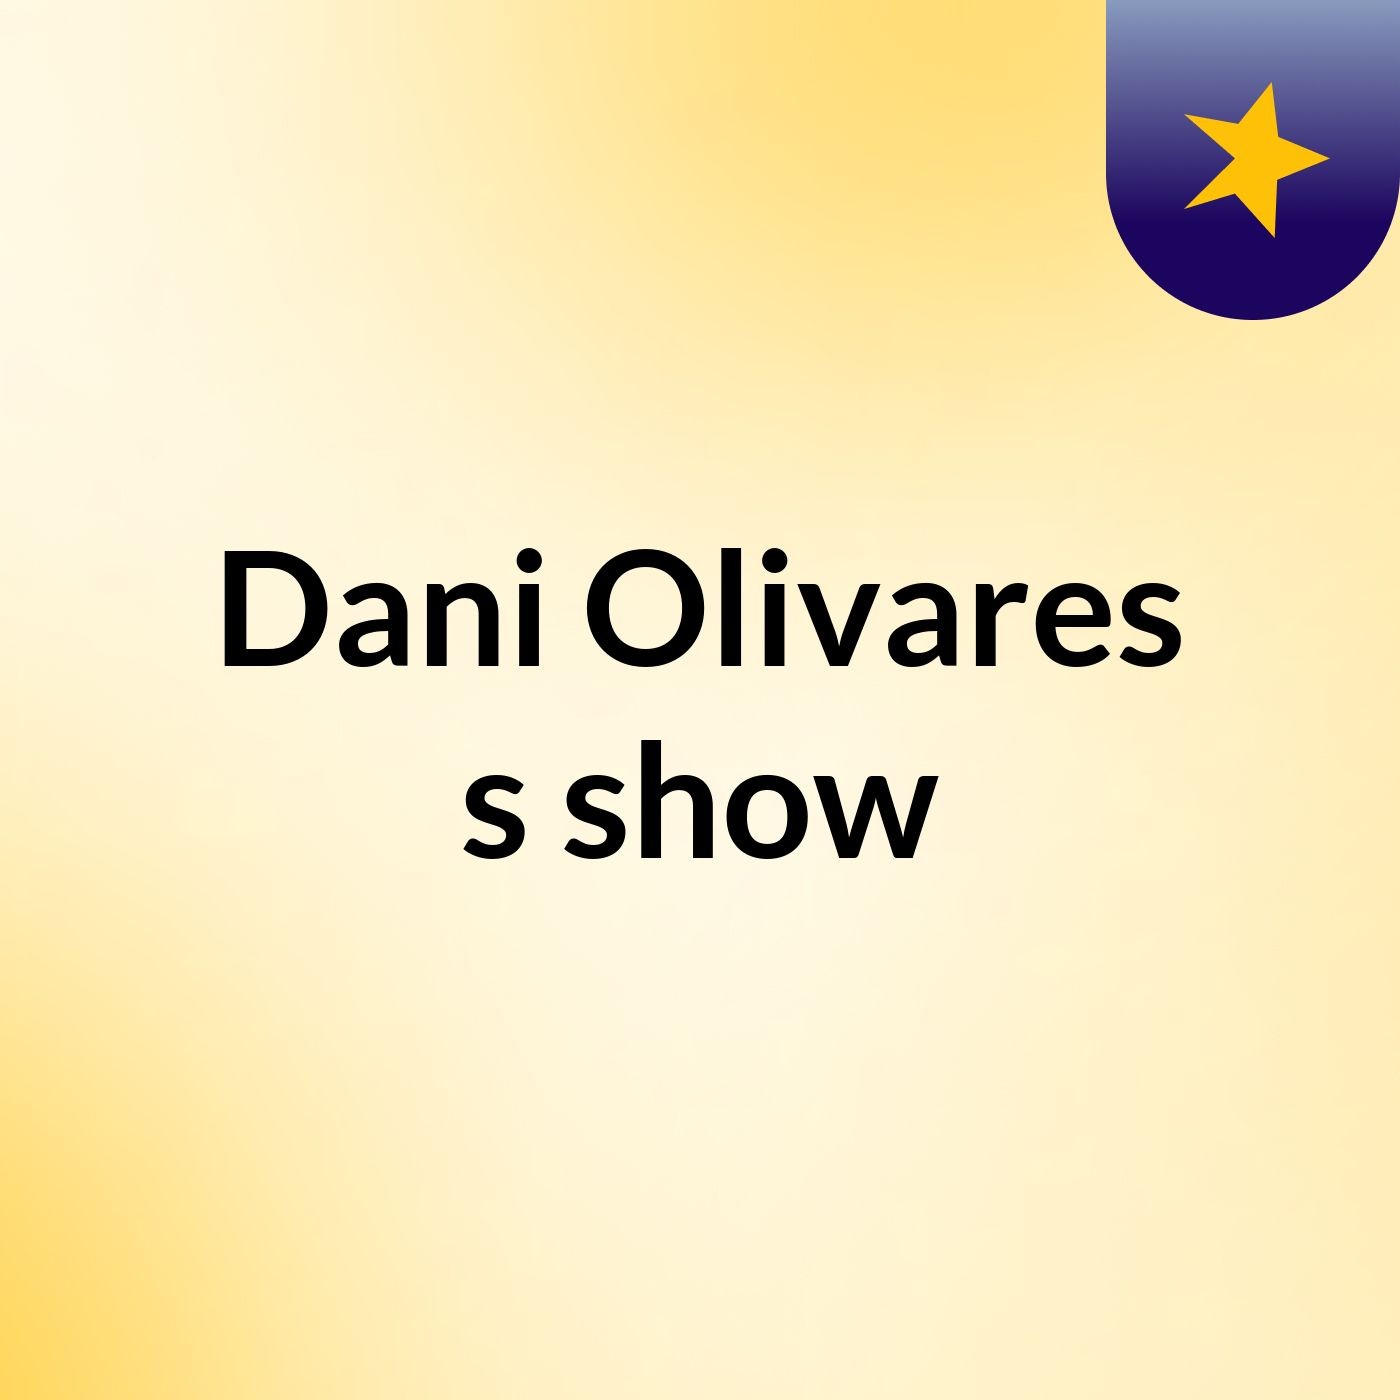 Dani Olivares's show